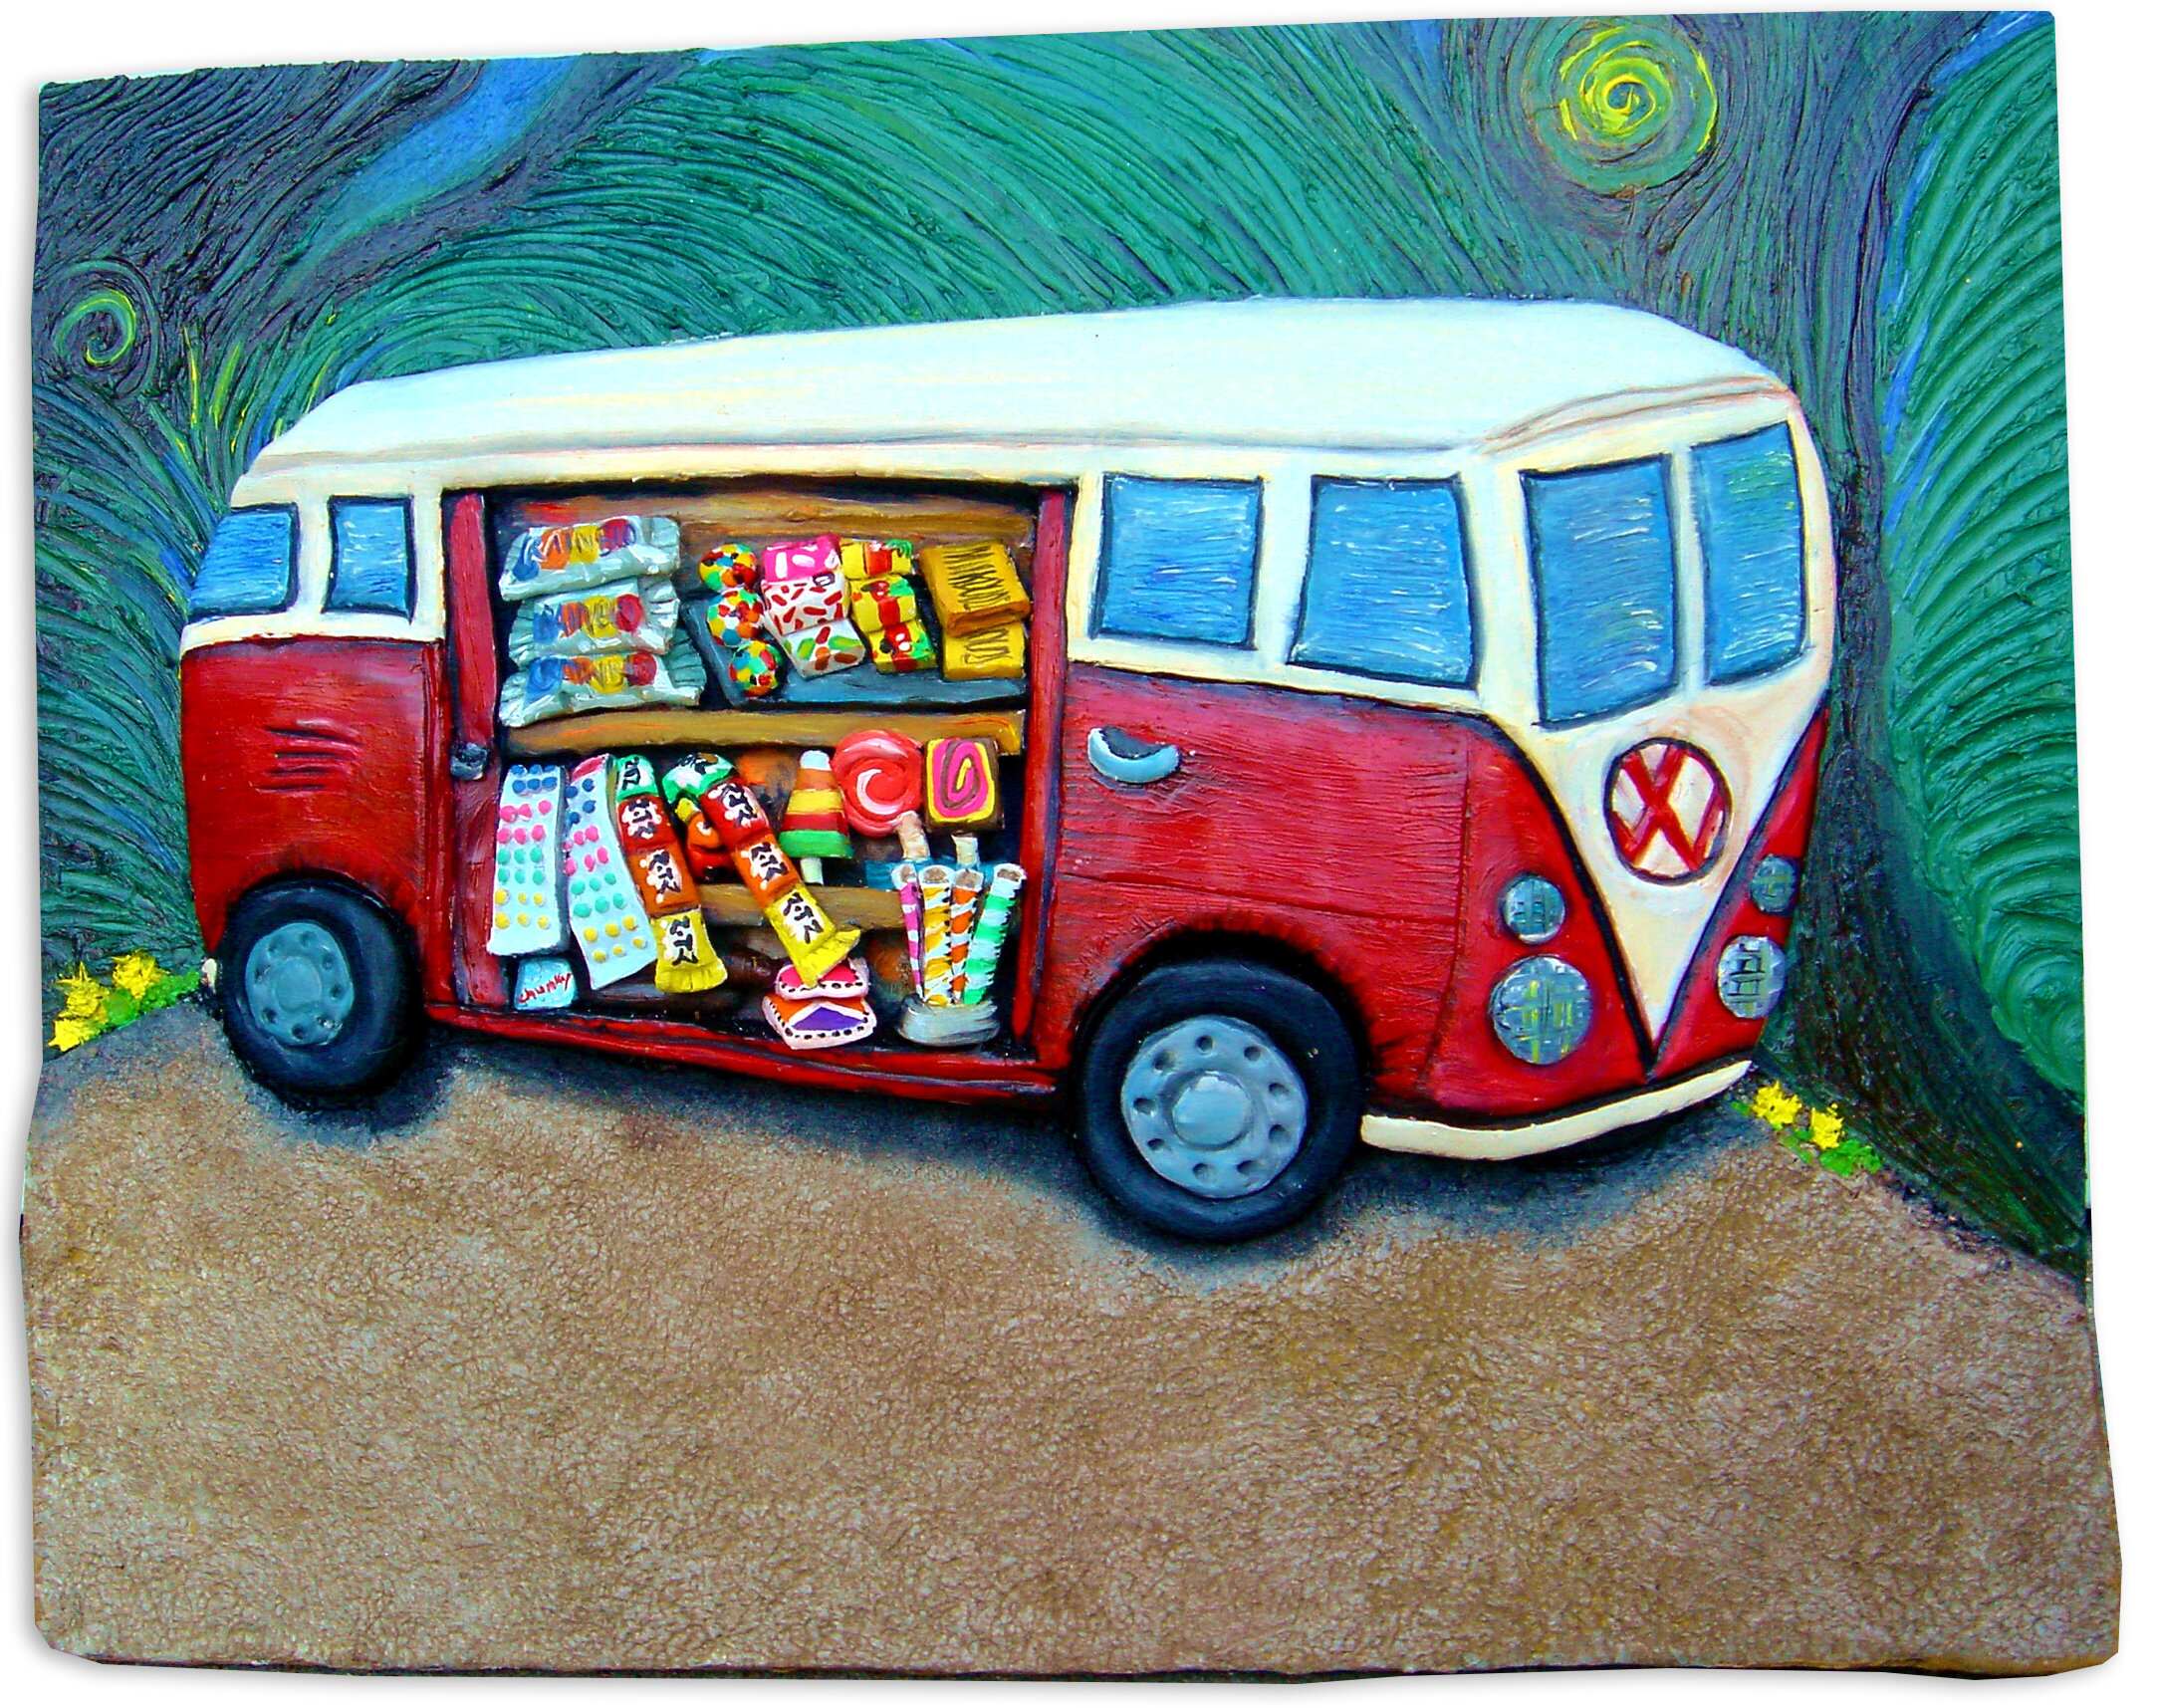 Don's Candy Van